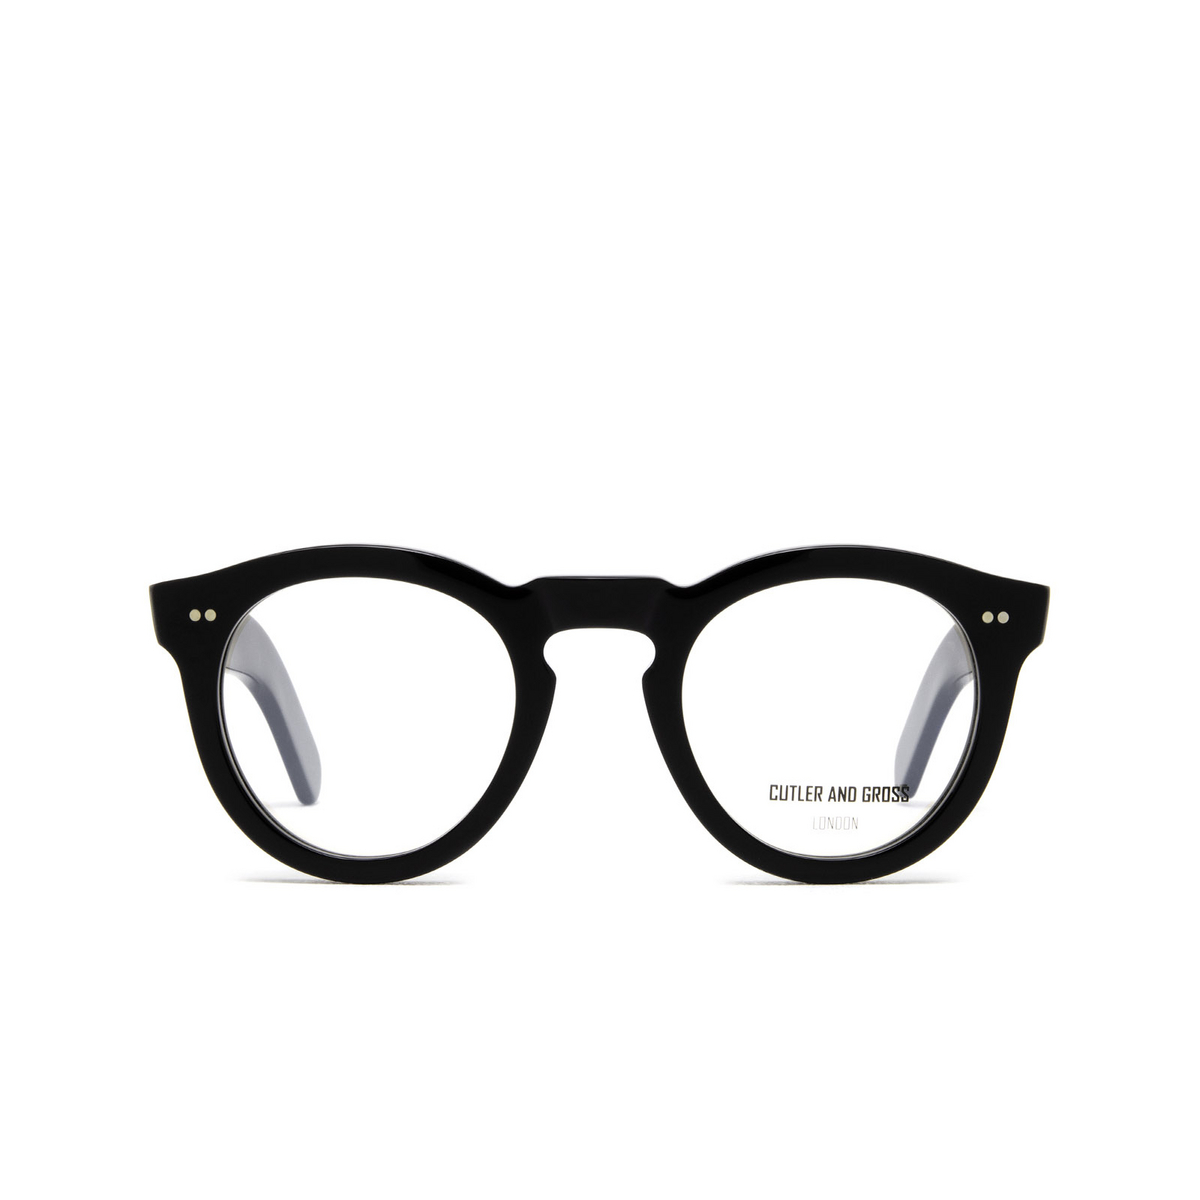 Cutler and Gross 0734V3 Eyeglasses B Black - front view